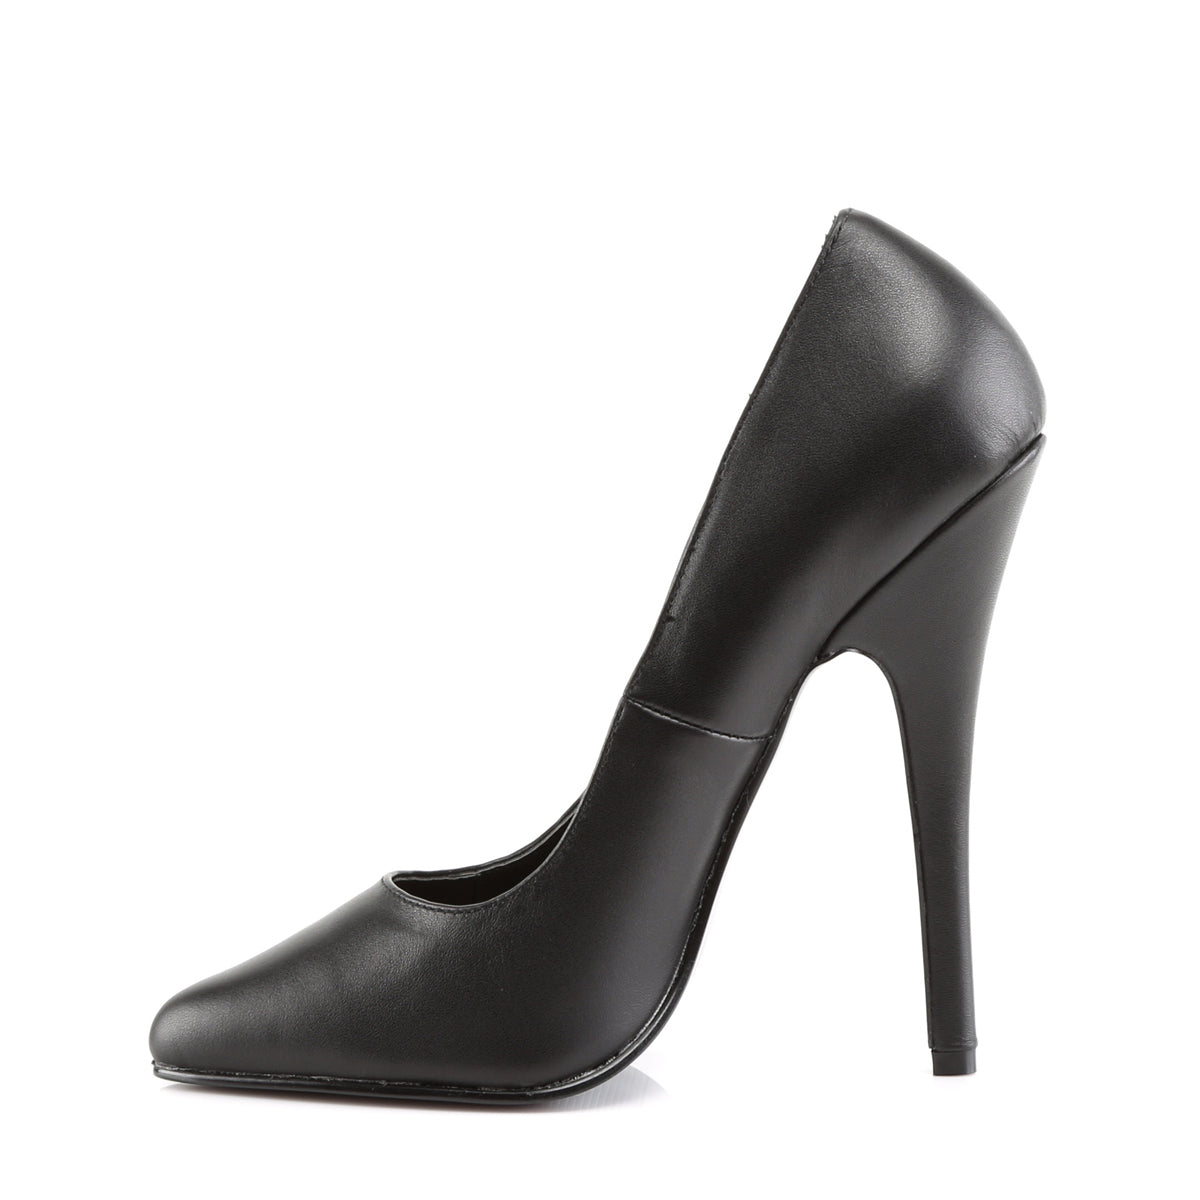 DOMINA 420 Devious 6 Inch Heel Black Leather Erotic Shoes Devious Heels Pole Dance Heels